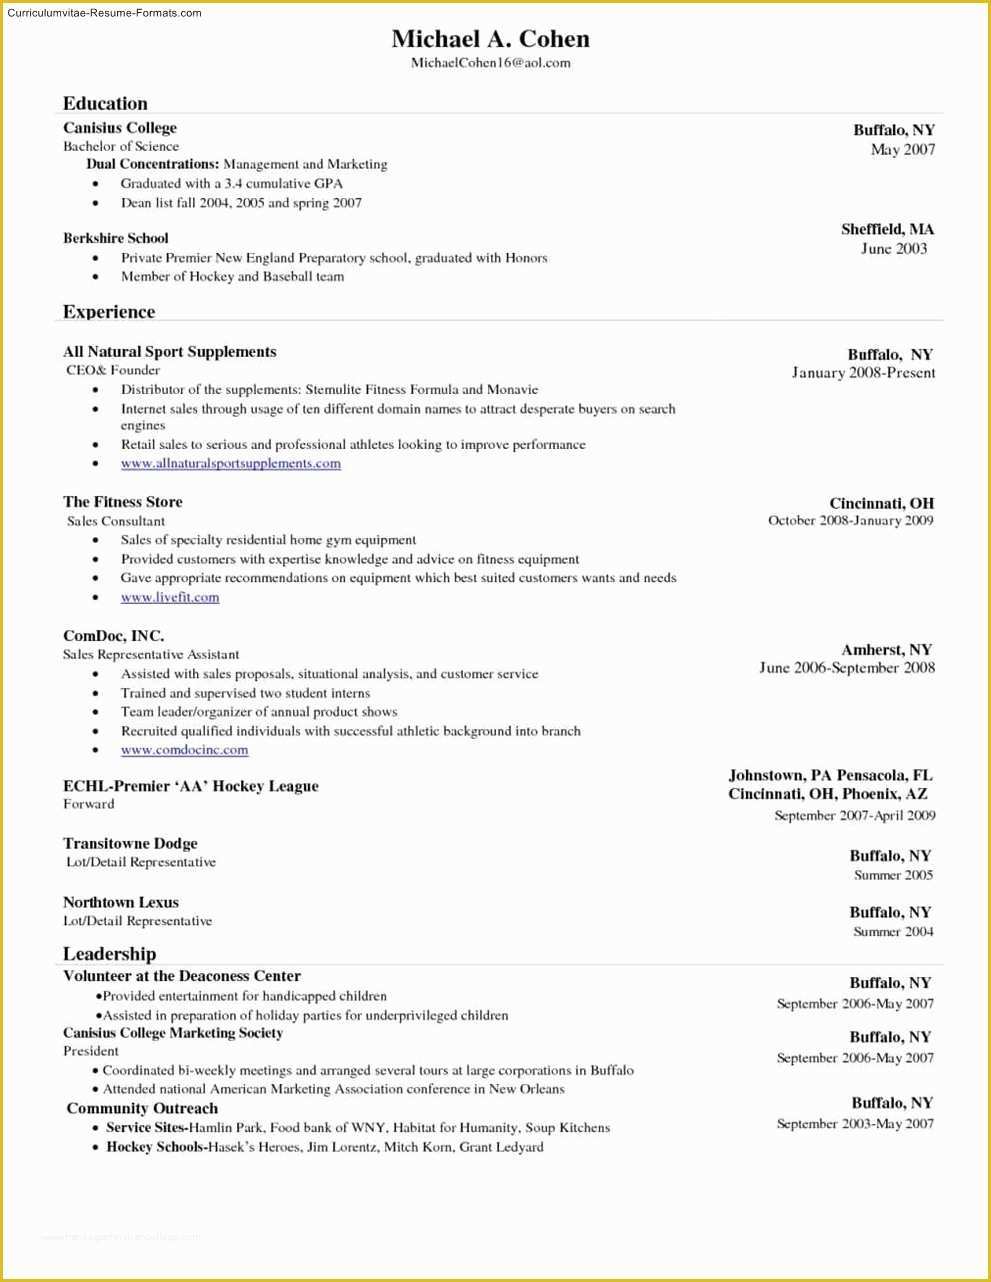 Free Job Resume Templates for Microsoft Word Of Microsoft Word 2010 Resume Template Download Free